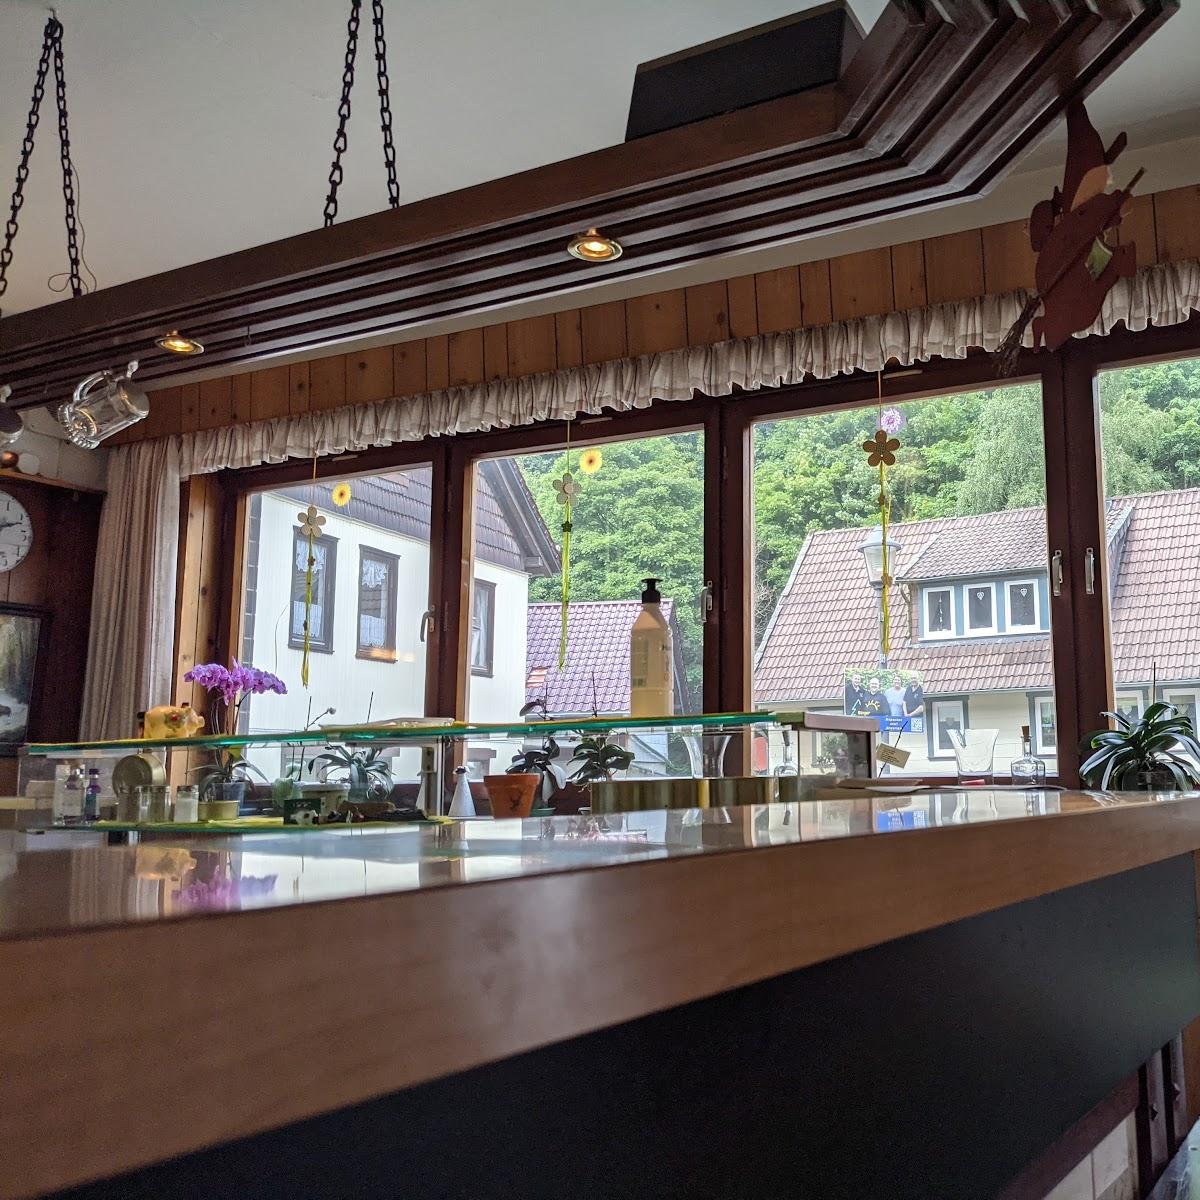 Restaurant "Wurstezipfel" in Altenau